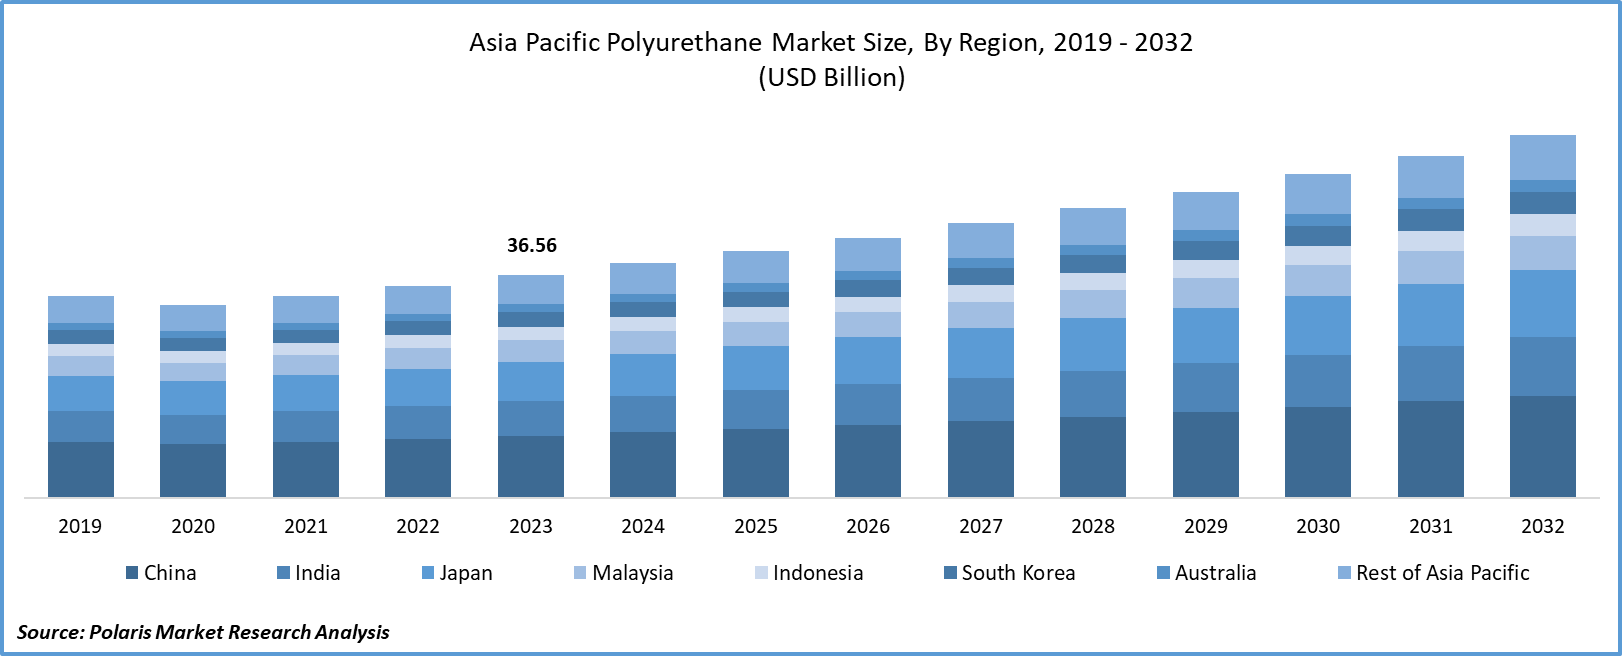 Asia Pacific Polyurethane Market Size